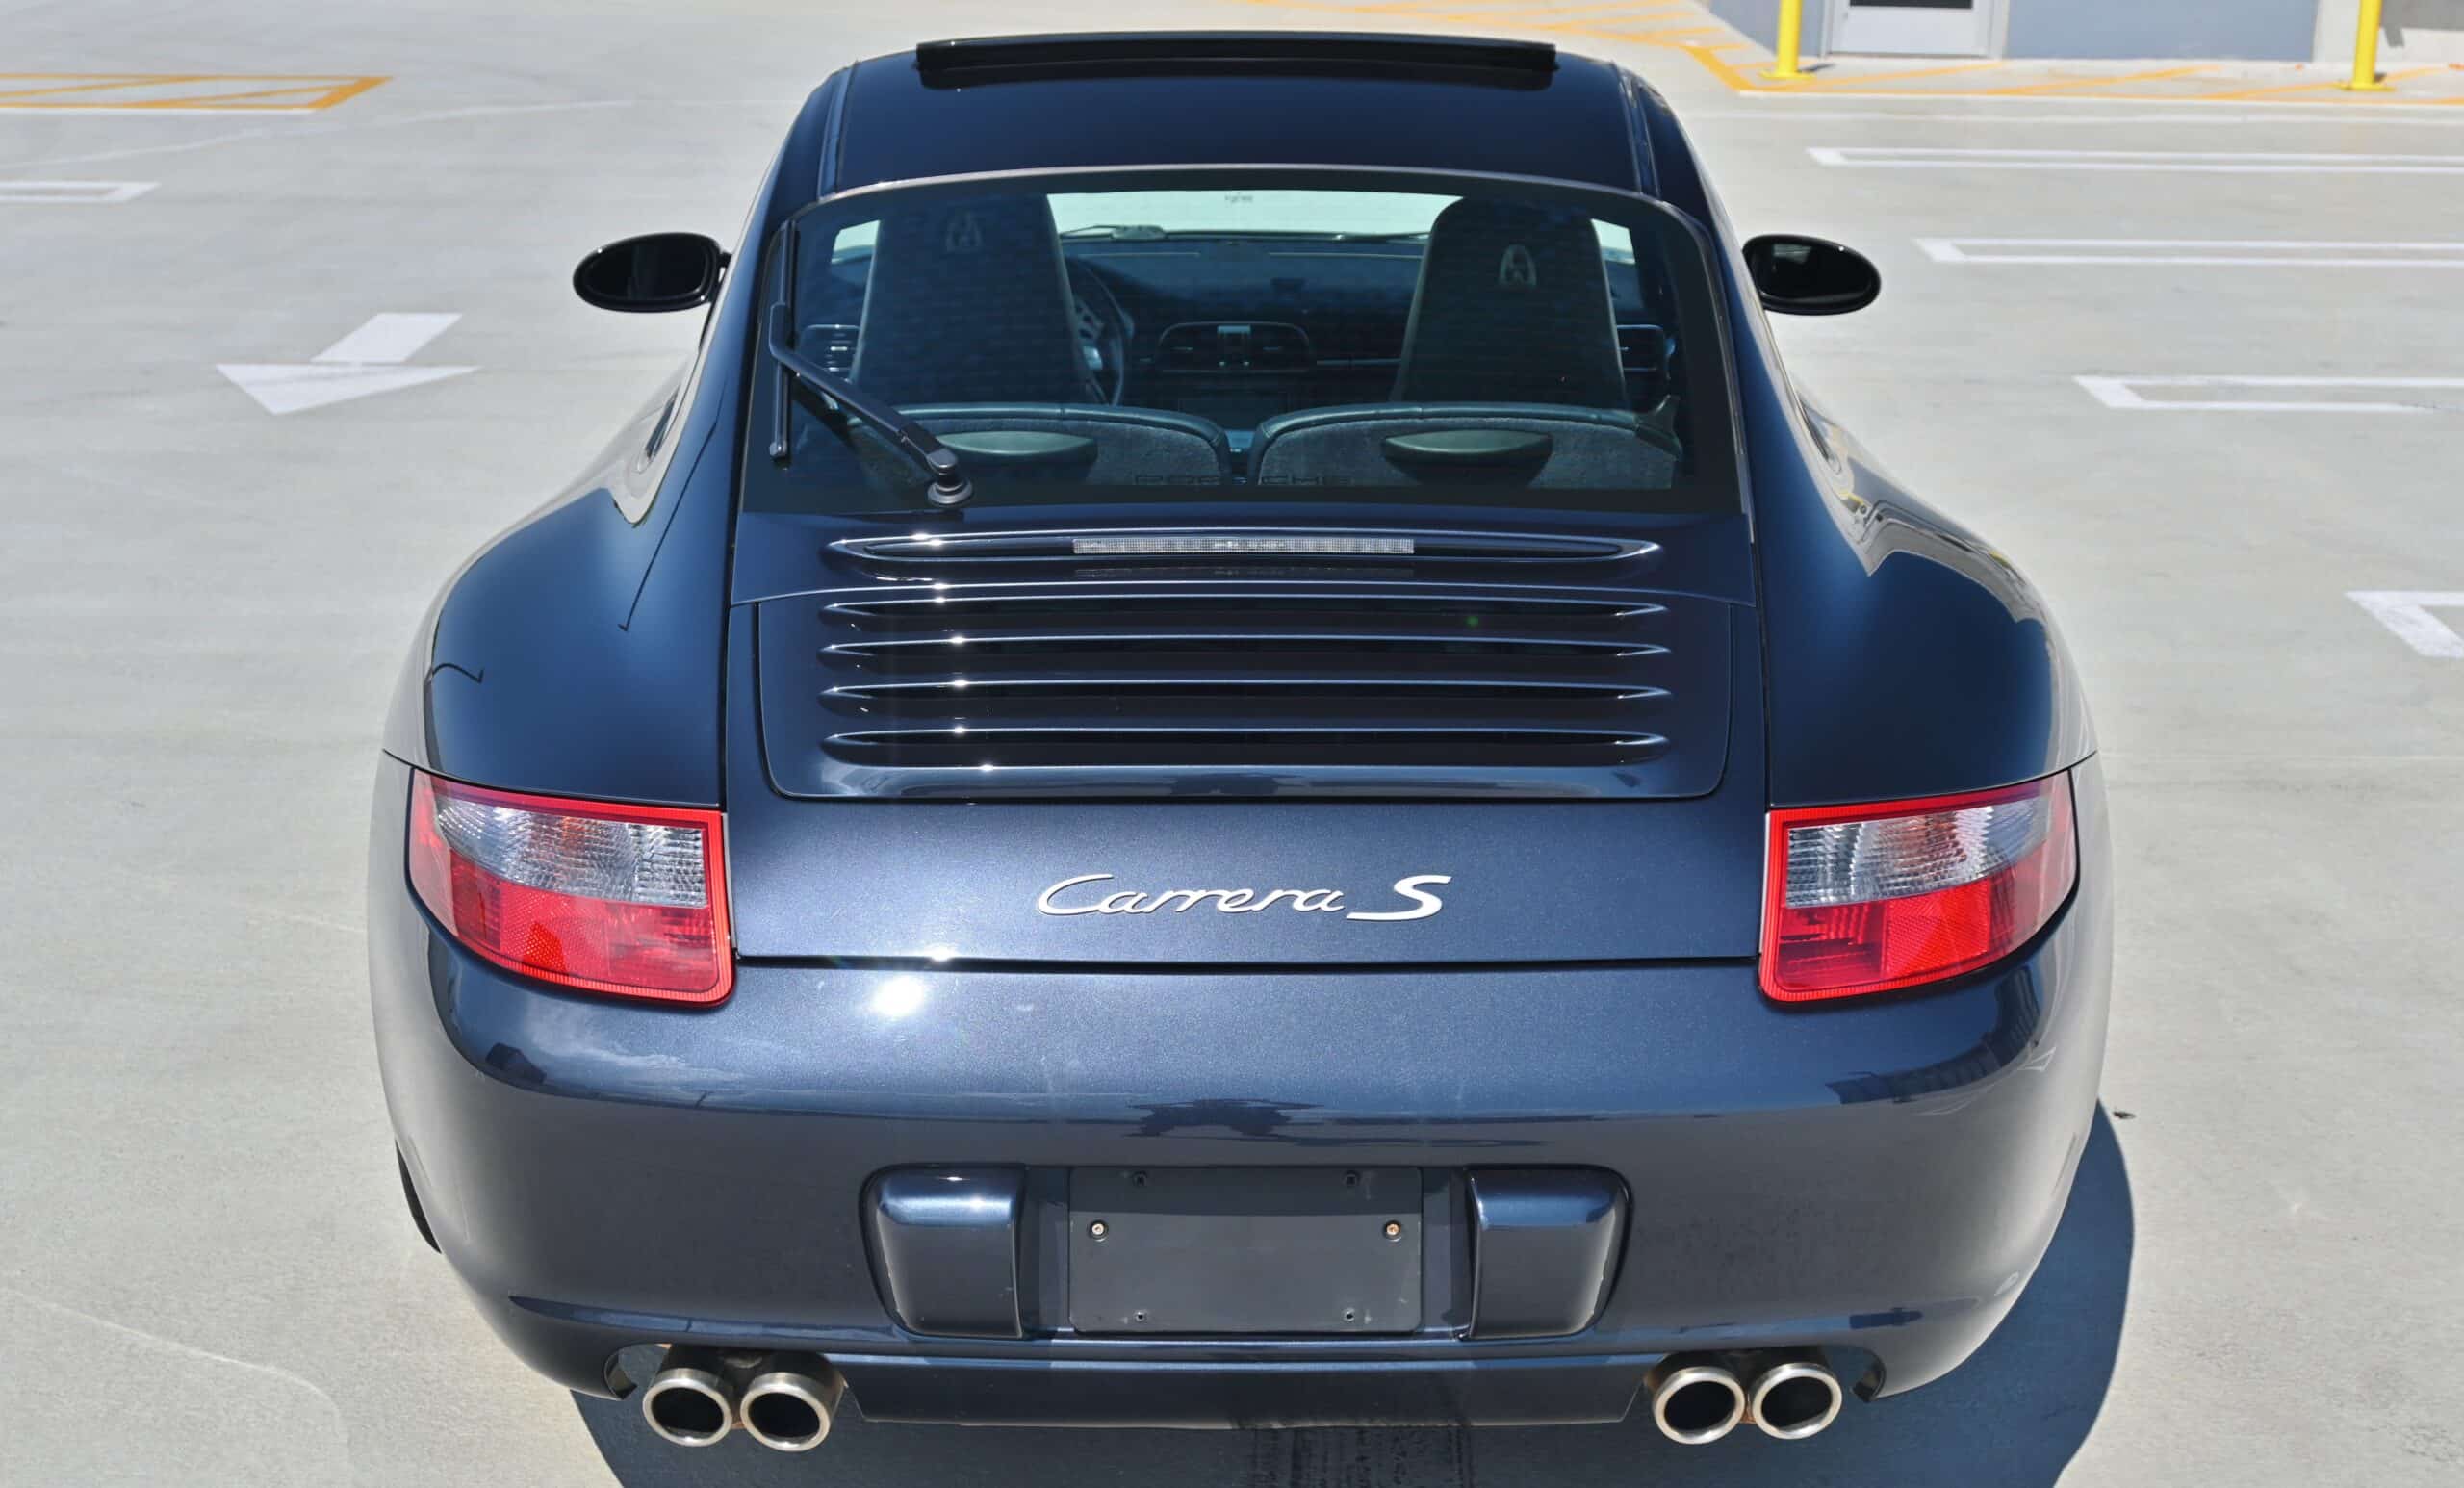 2005 Porsche 911 997.1 Carrera S Rare Atlas Gray On Sea Blue – 49K Miles – 4.0L Engine Upgrade – 6 Speed Manual